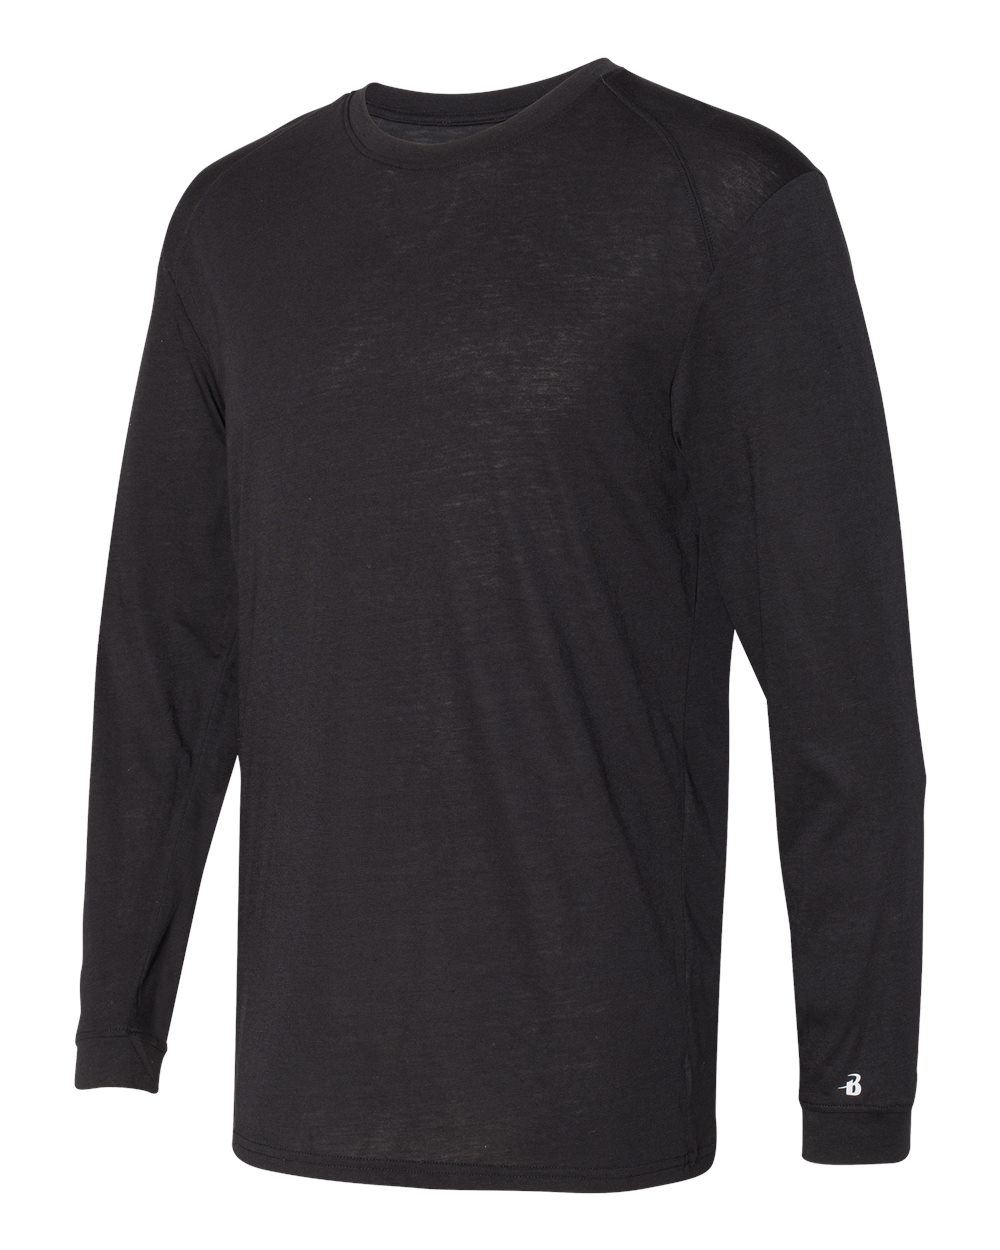 Badger 4944 - Men's Triblend Performance Long Sleeve T-Shirt